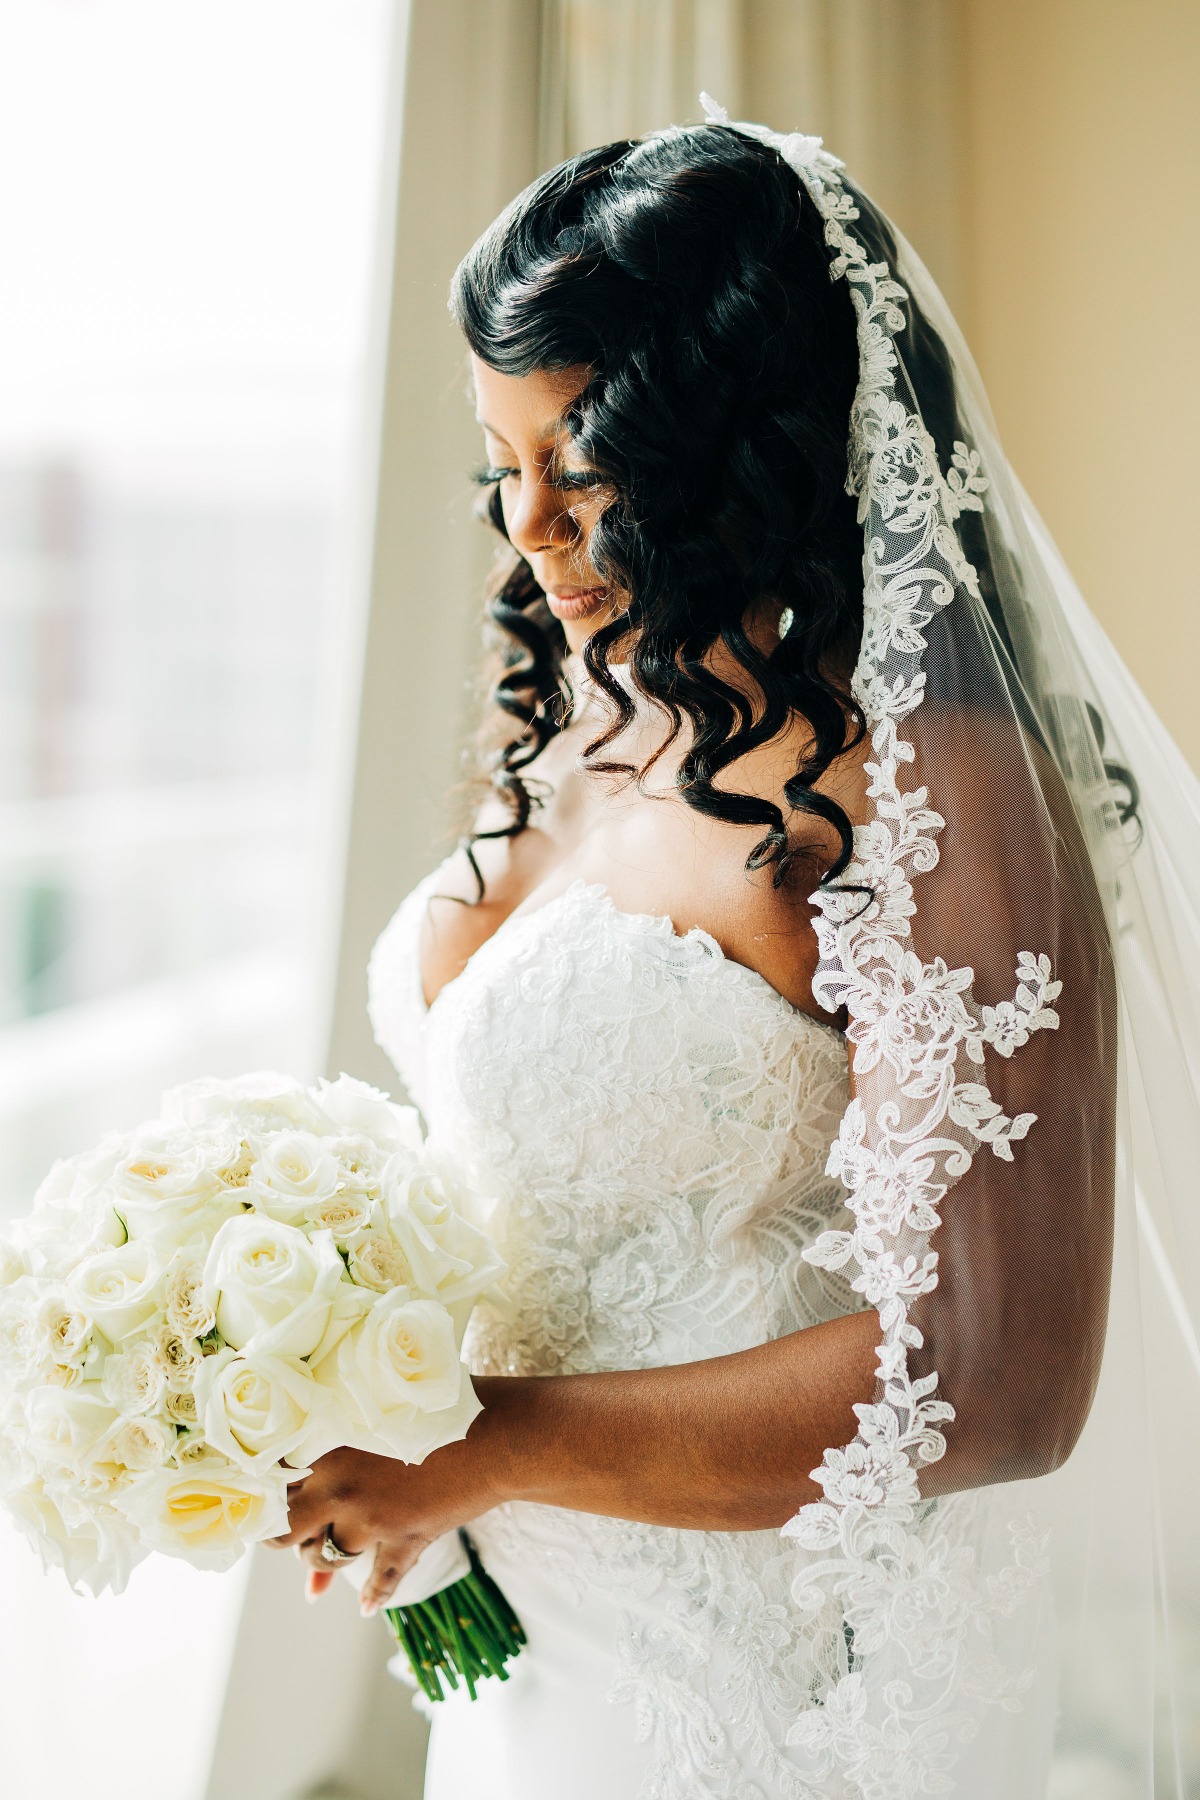 Top DIY Bridal Hairstyles by Abra McField